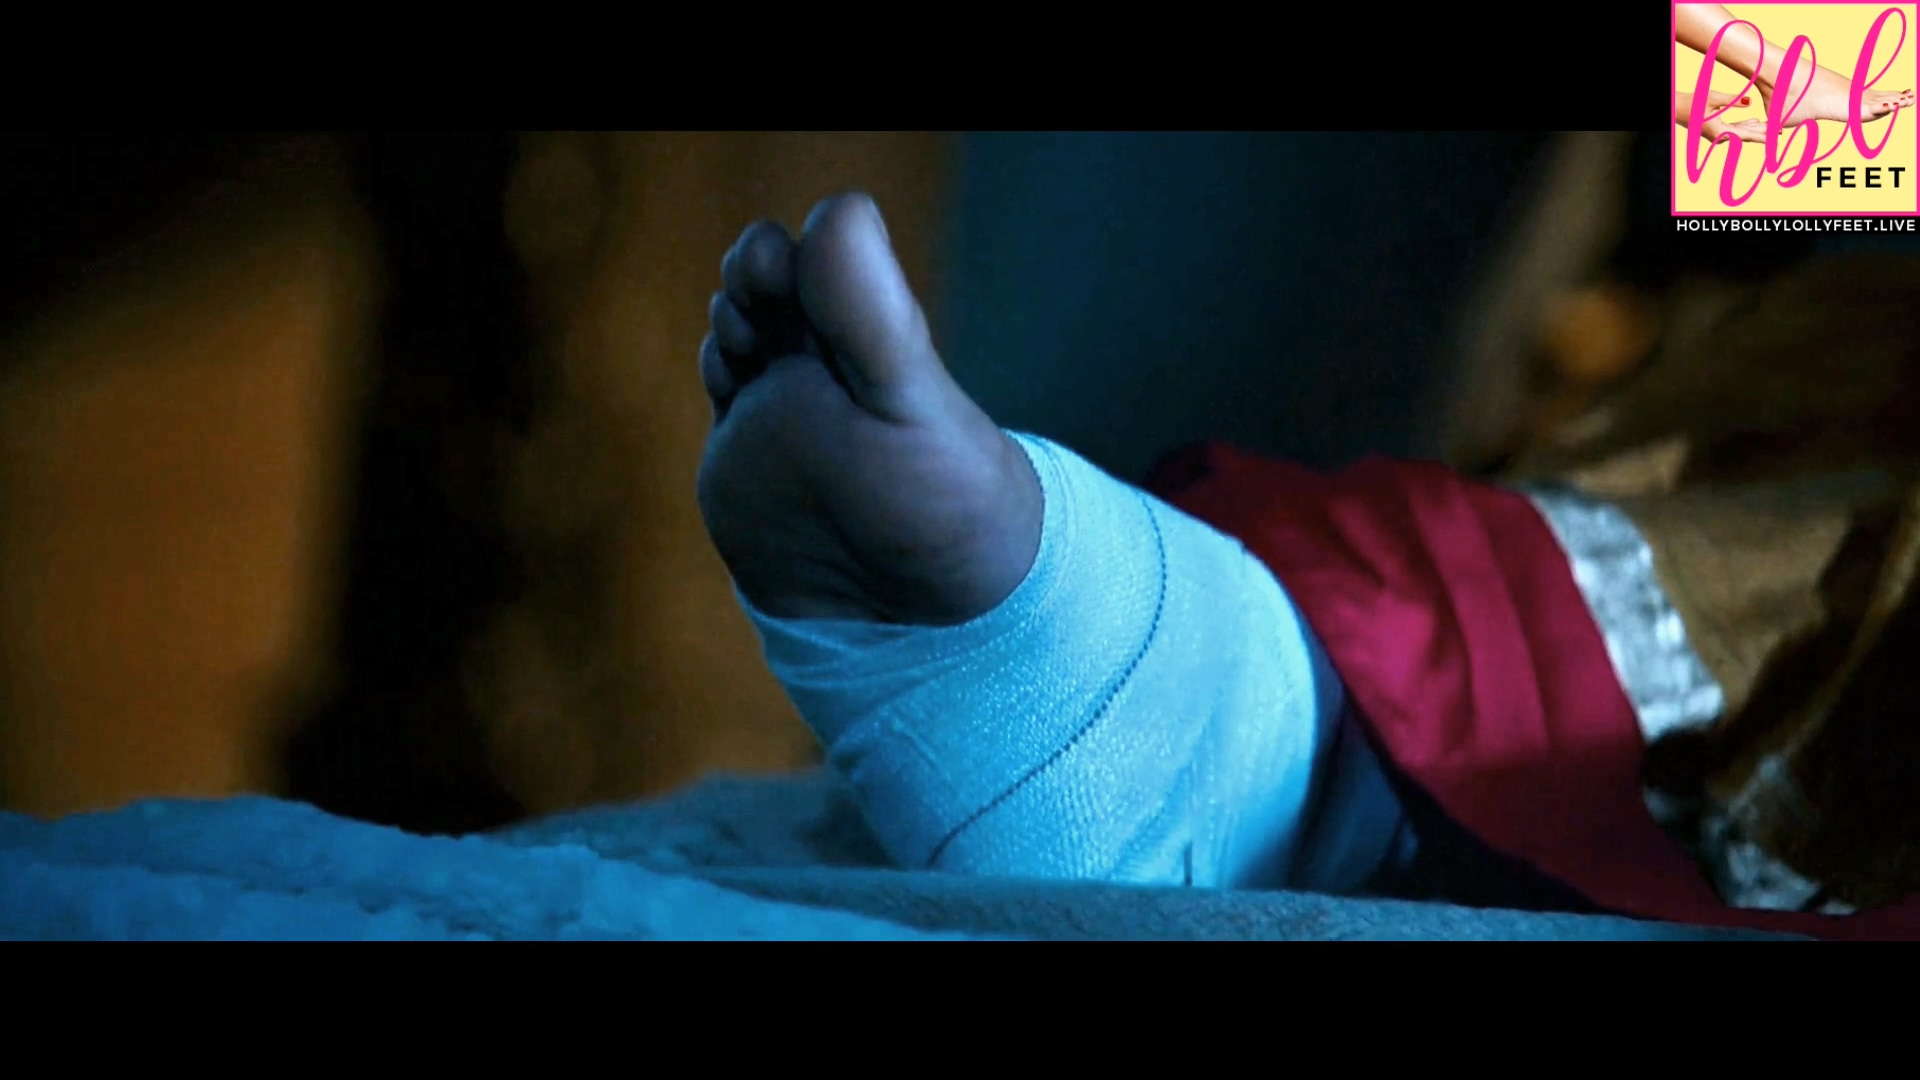 Ileana D’Cruz Feet & Soles Closeup from Indian Hindi Movie “Rustom”.